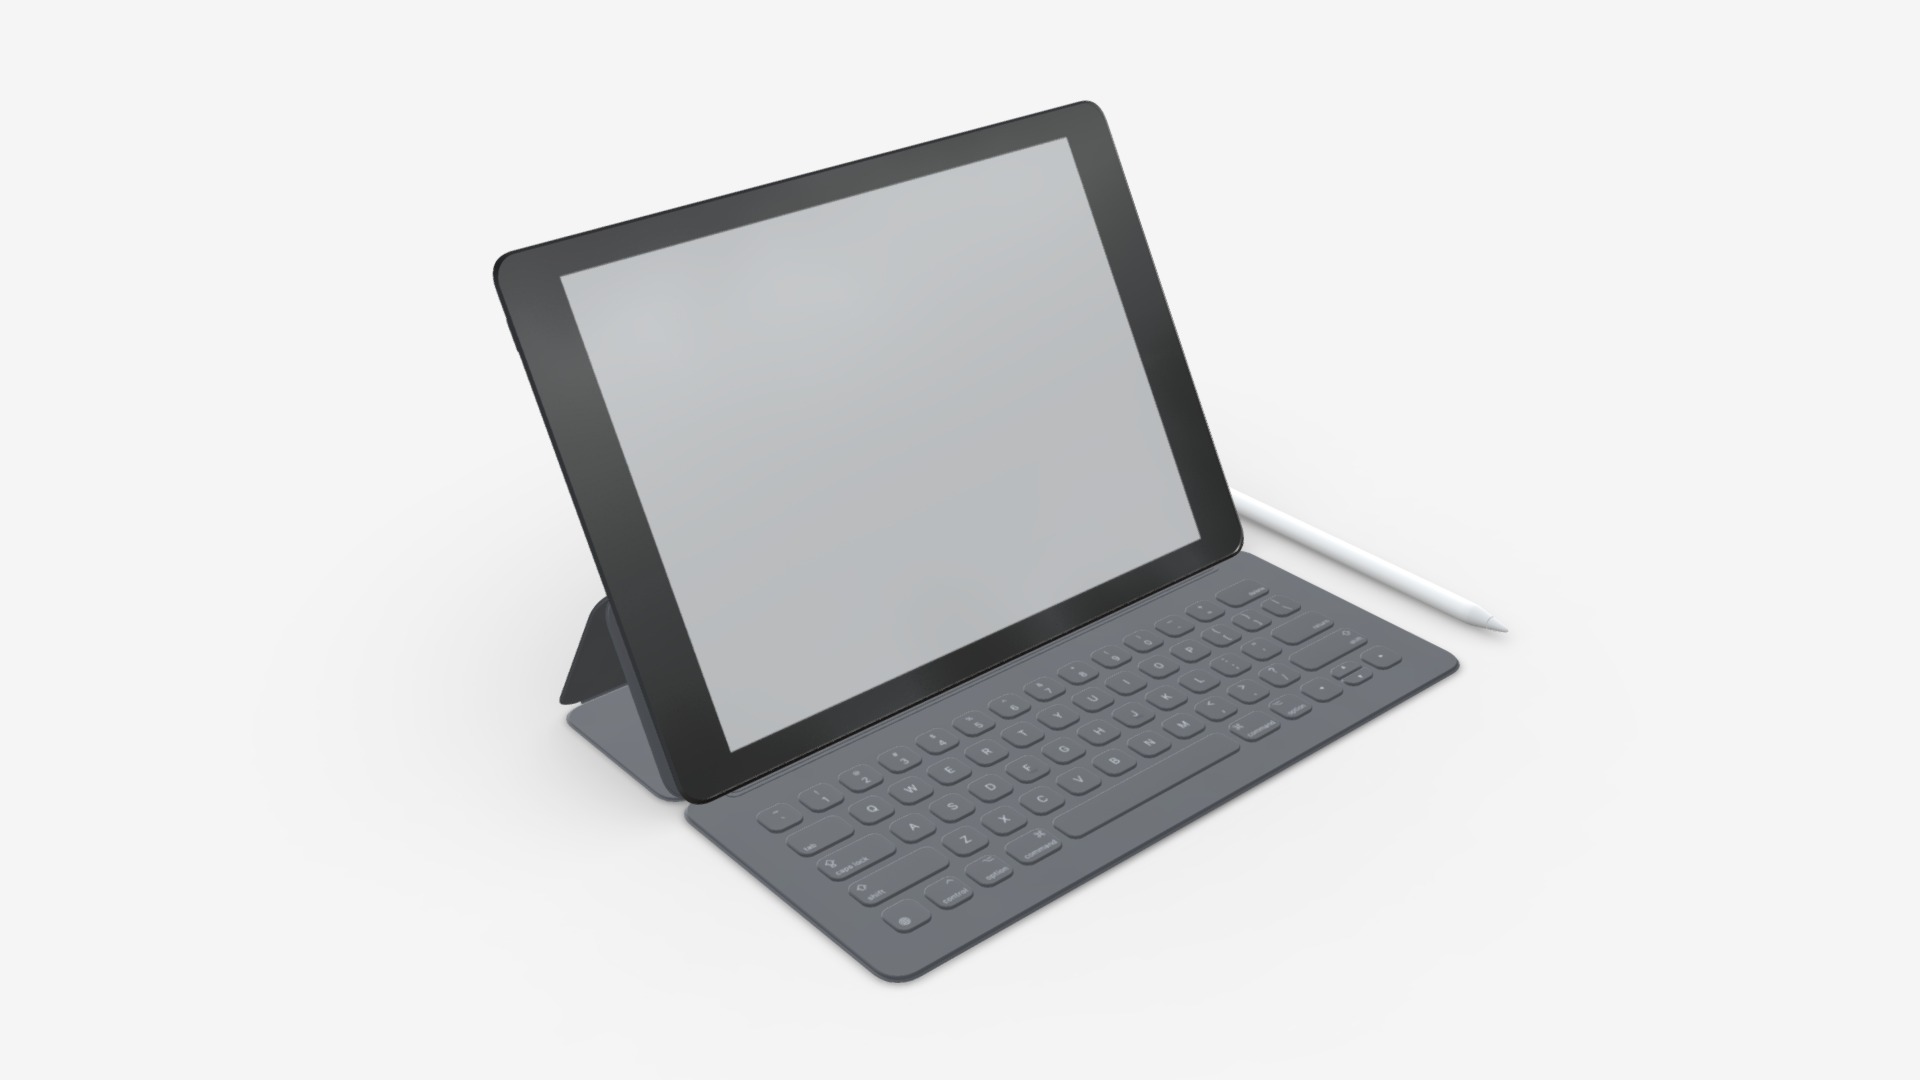 3D model Digital tablet with keyboard mock up - This is a 3D model of the Digital tablet with keyboard mock up. The 3D model is about a laptop with a keyboard.